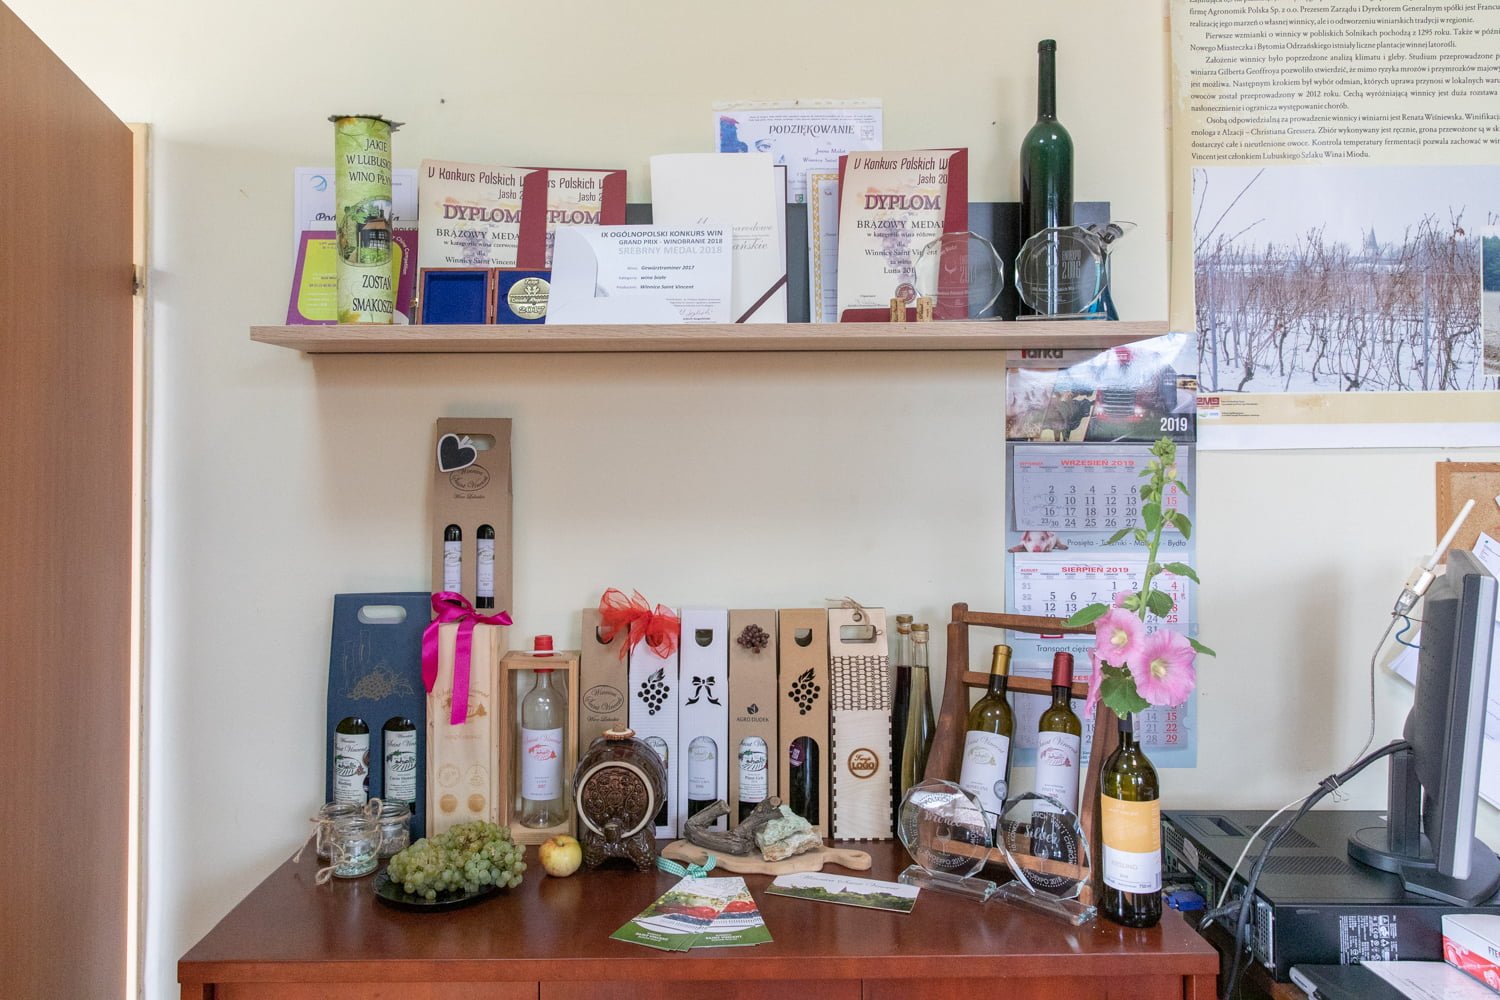 Winnica Saint Vincent is Making award-winning wine